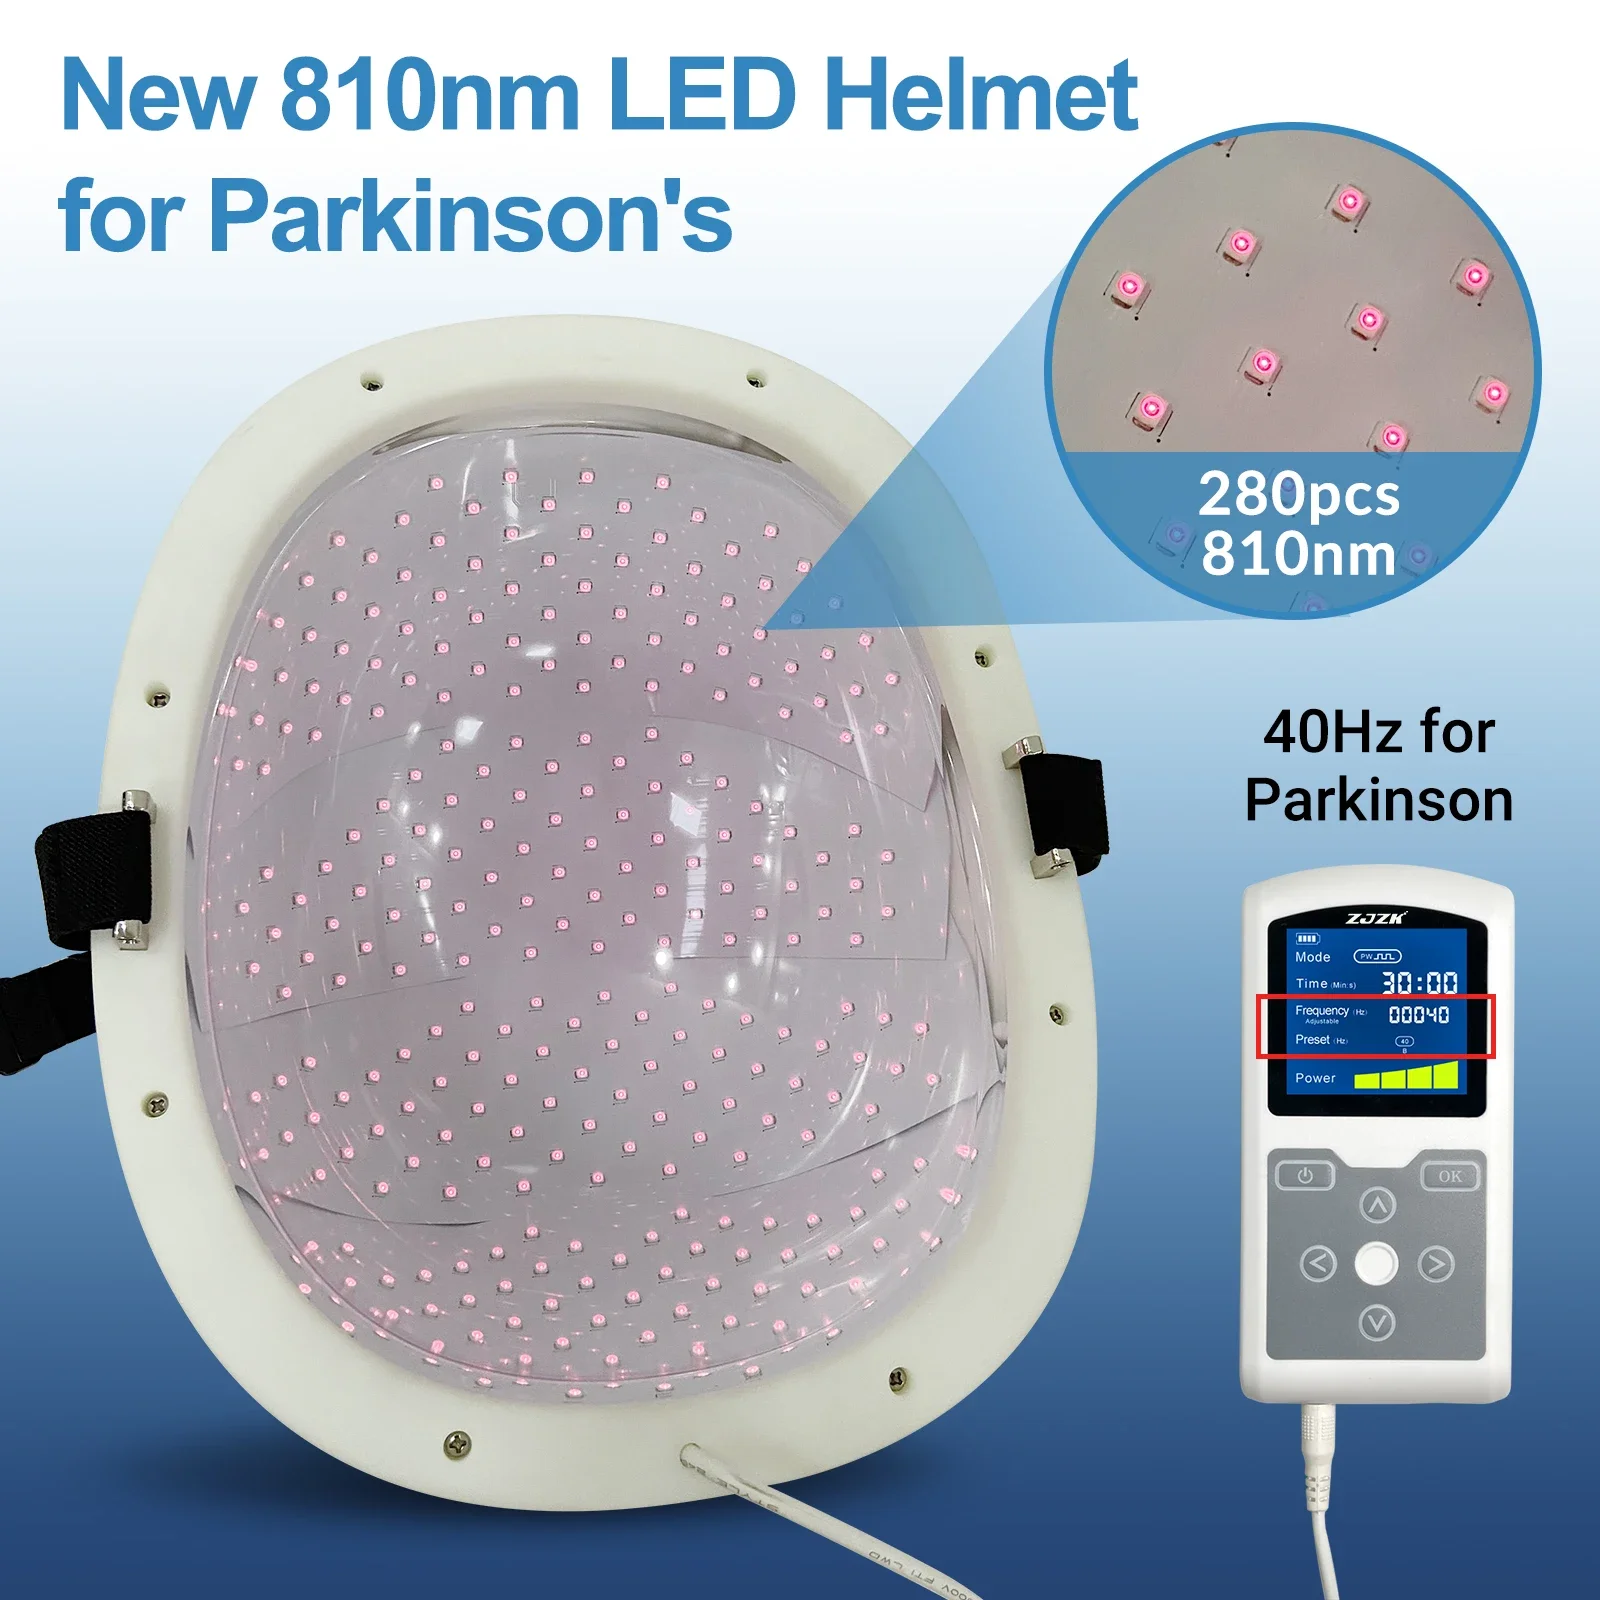 ZJZK Upgraded Effective Stimulate Nerve Alzheimer Parkinson Dementia PBM Treatment 810nm 1070nm 280 LED Chips 40Hz Brain Helmet